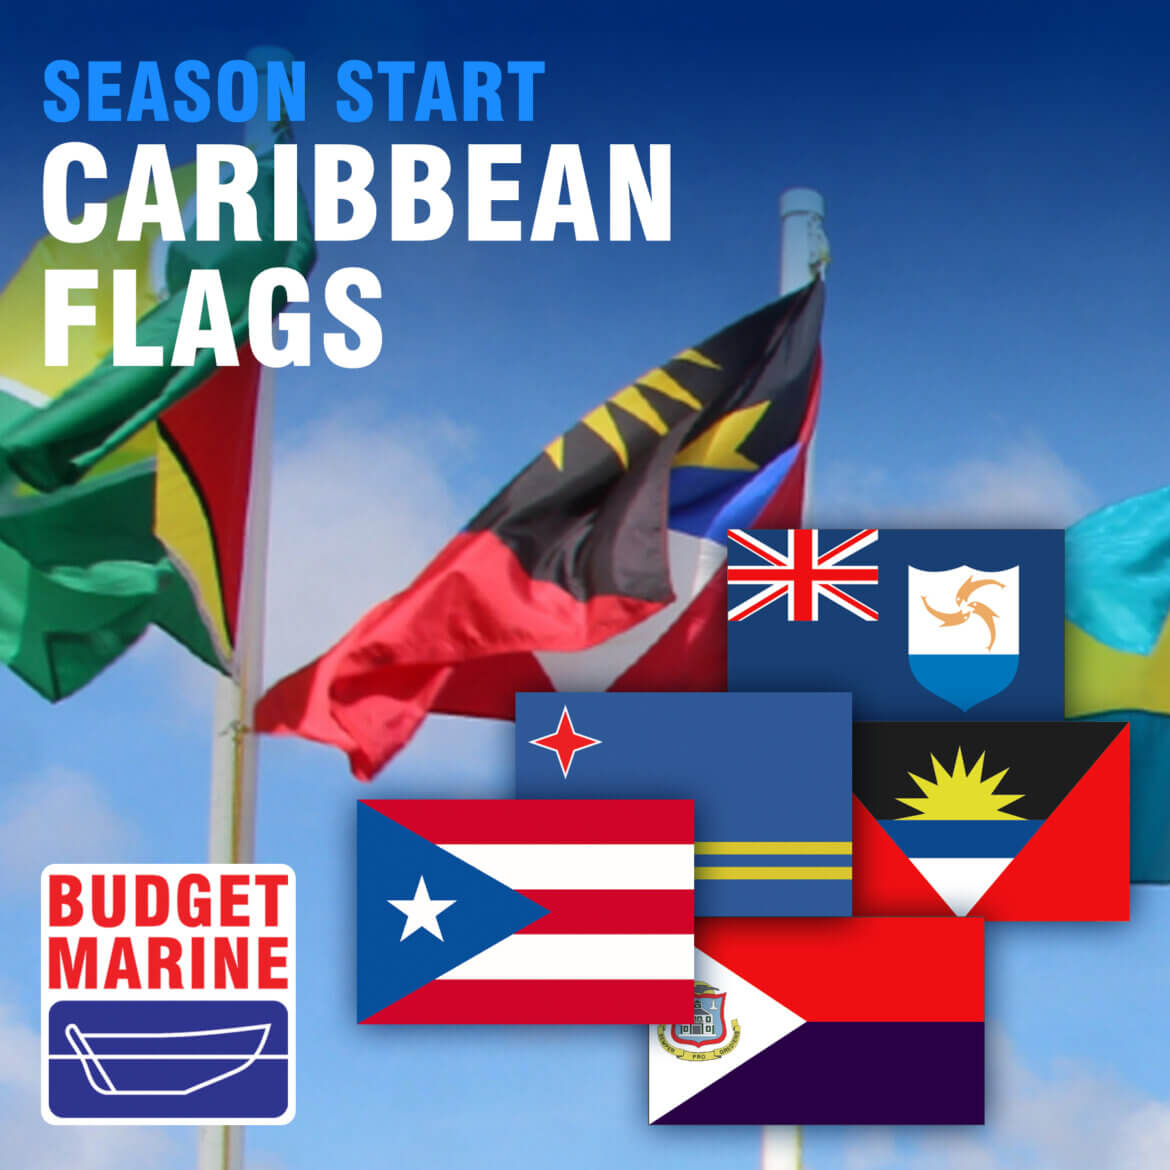 Budget Marine Antigua - North Sound 6